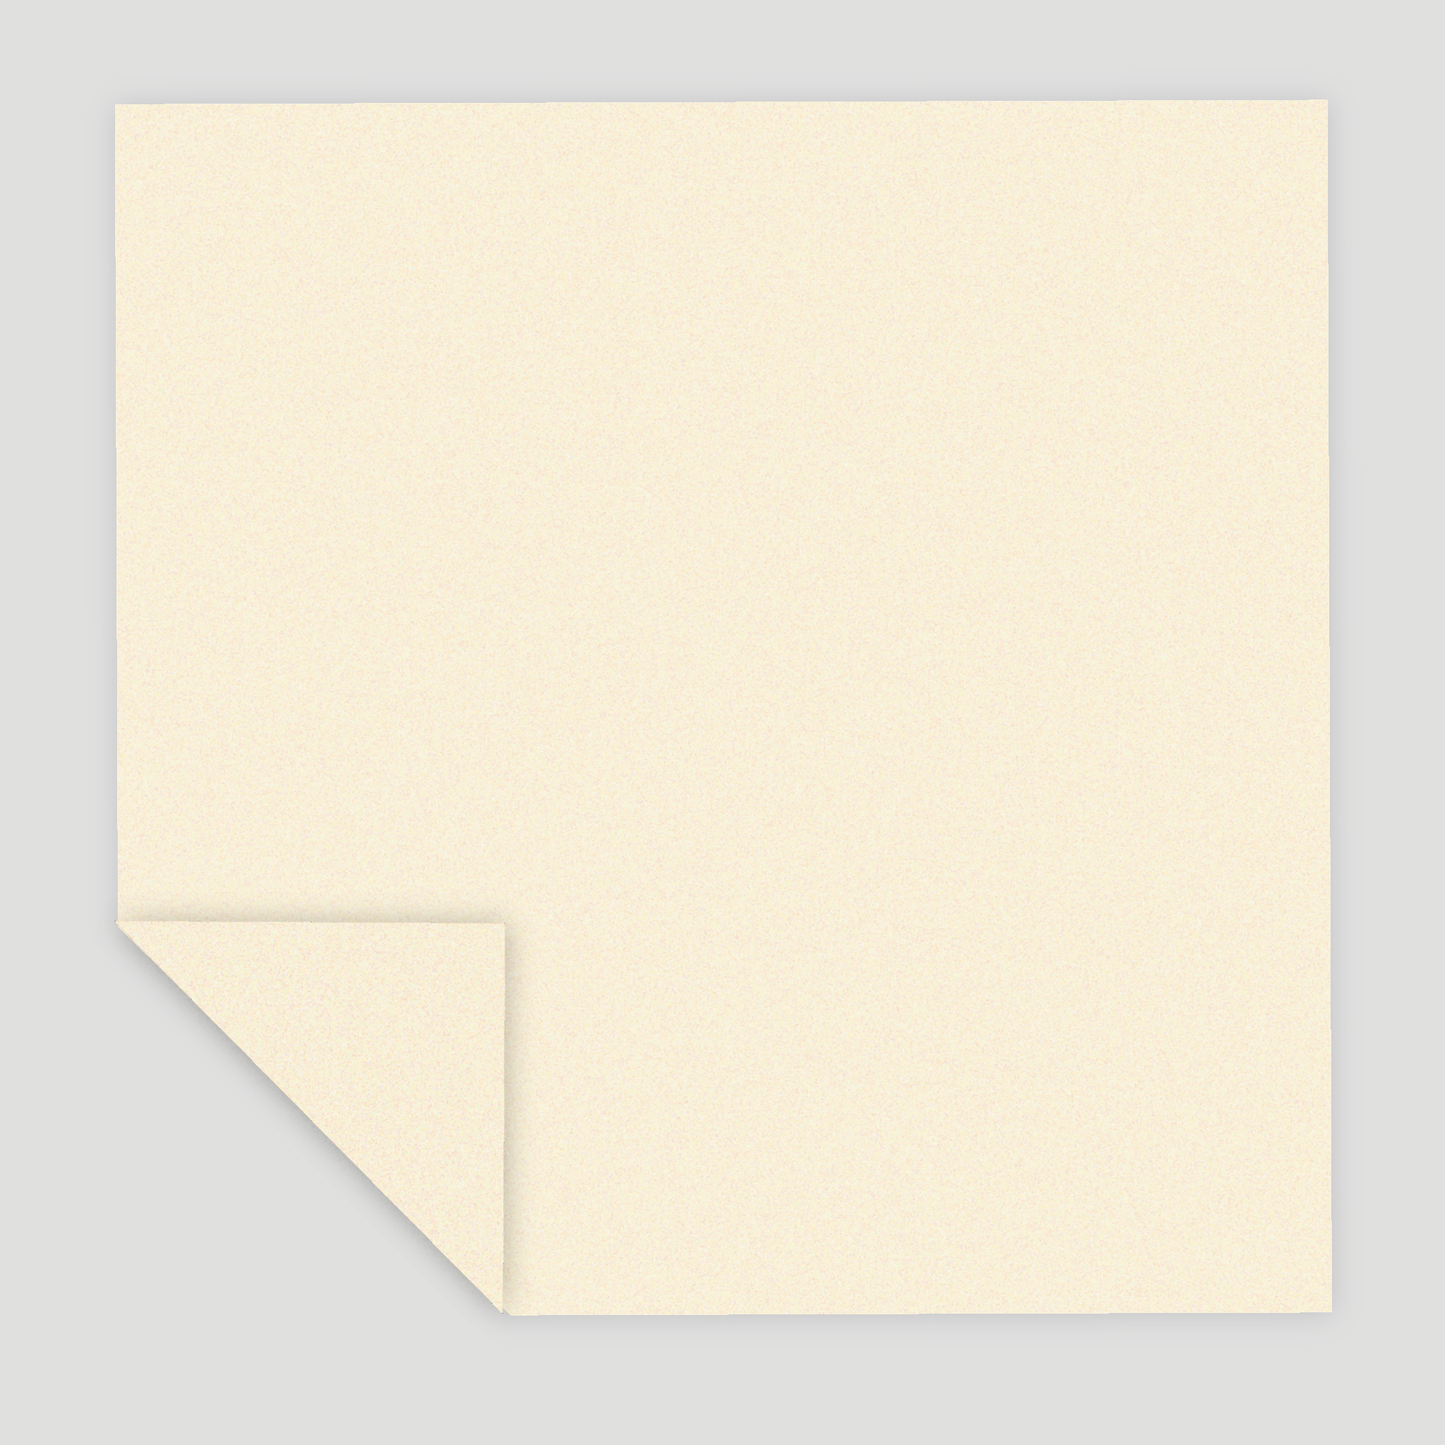 【Taro's Origami Studio】ビオトープ ジャンボ 13.75インチ/35cm 単色(ナチュラルホワイト) 10枚入(全同色) 上級フォルダー用高級和紙(日本製)